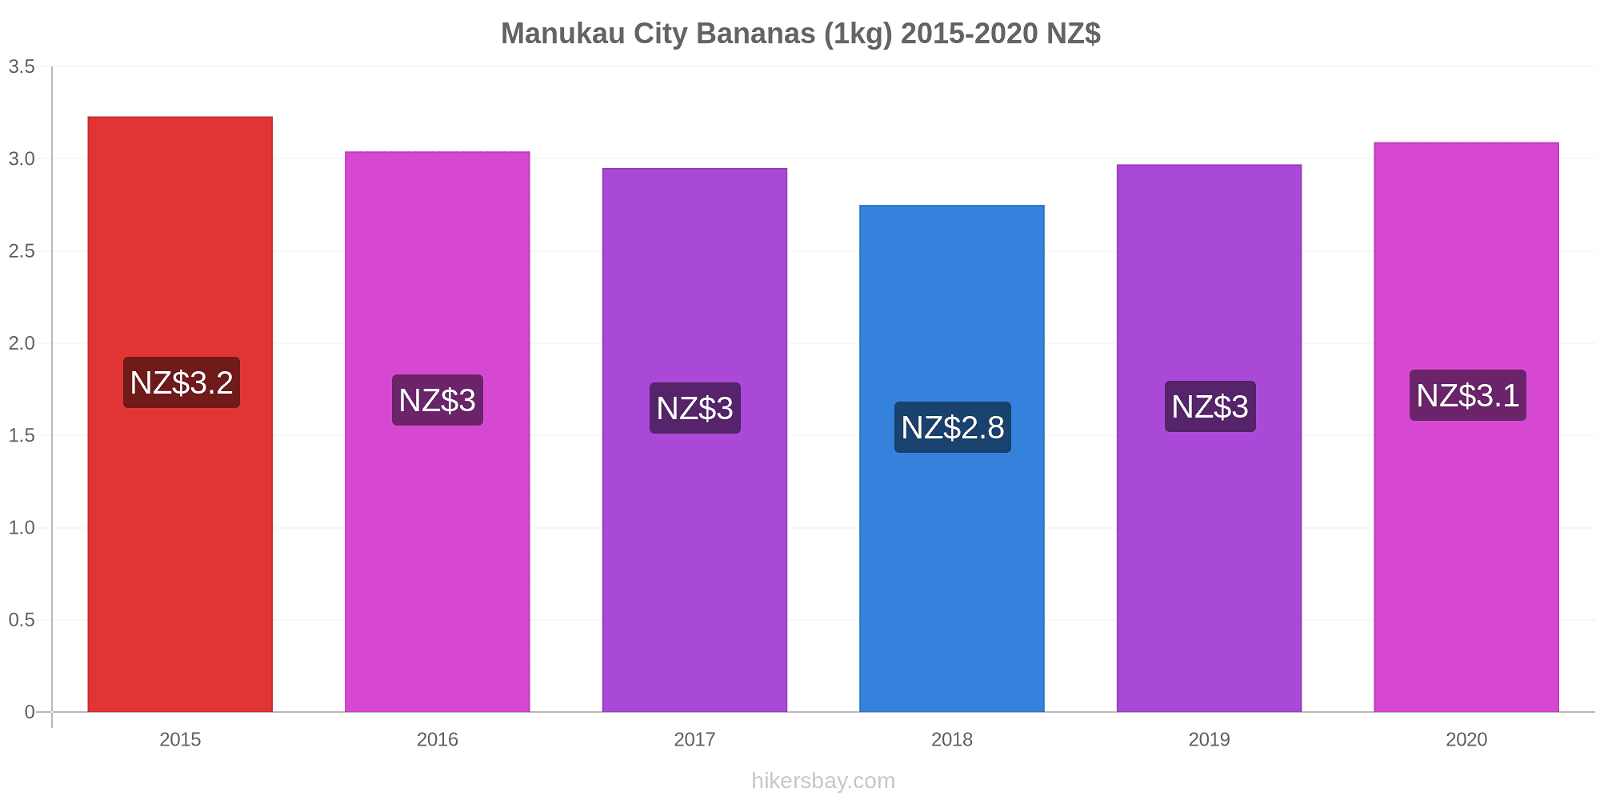 Manukau City price changes Bananas (1kg) hikersbay.com